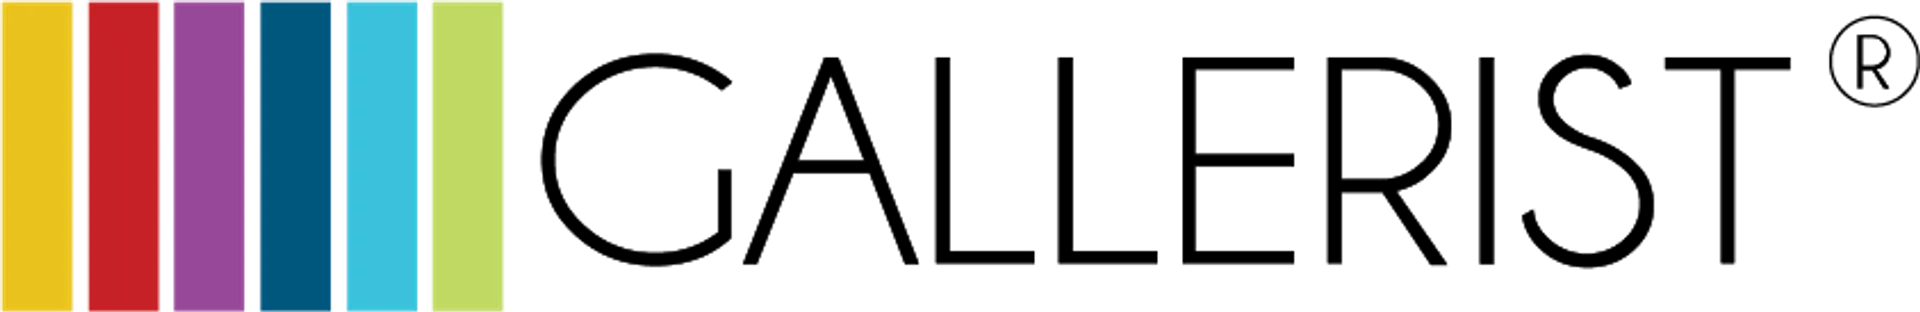 GALLERIST logo. Current catalogue